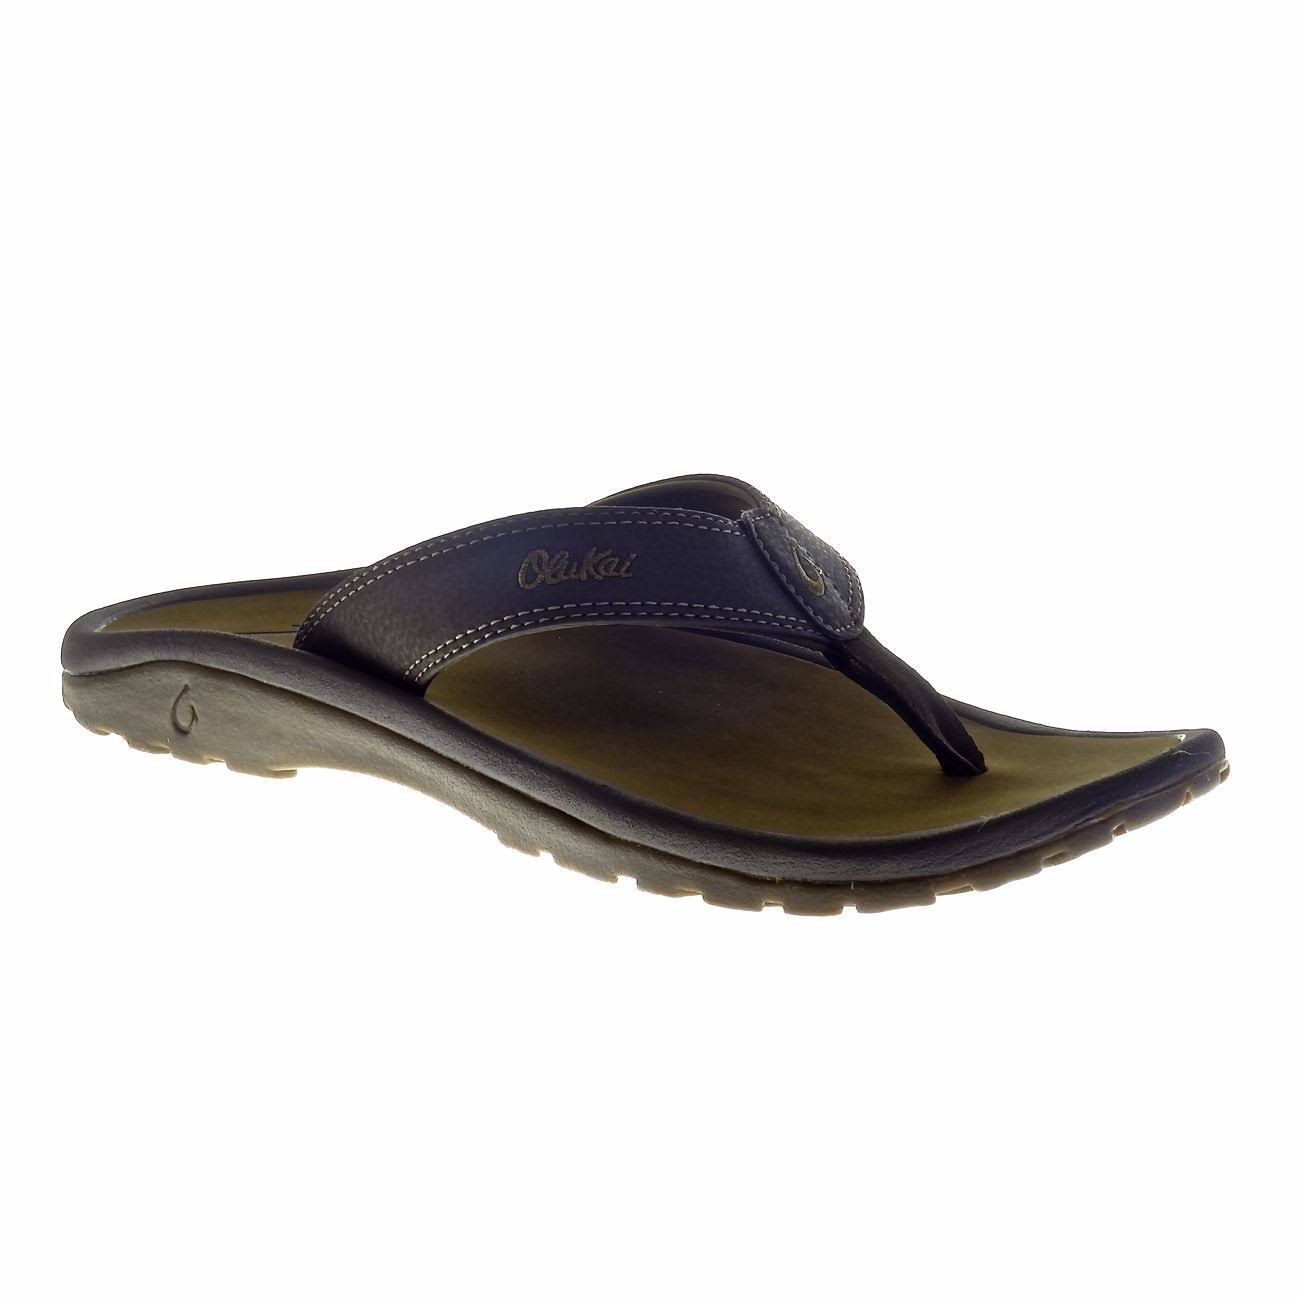 OluKai Ohana Men's Flip Flop - Brown, Size 9 M